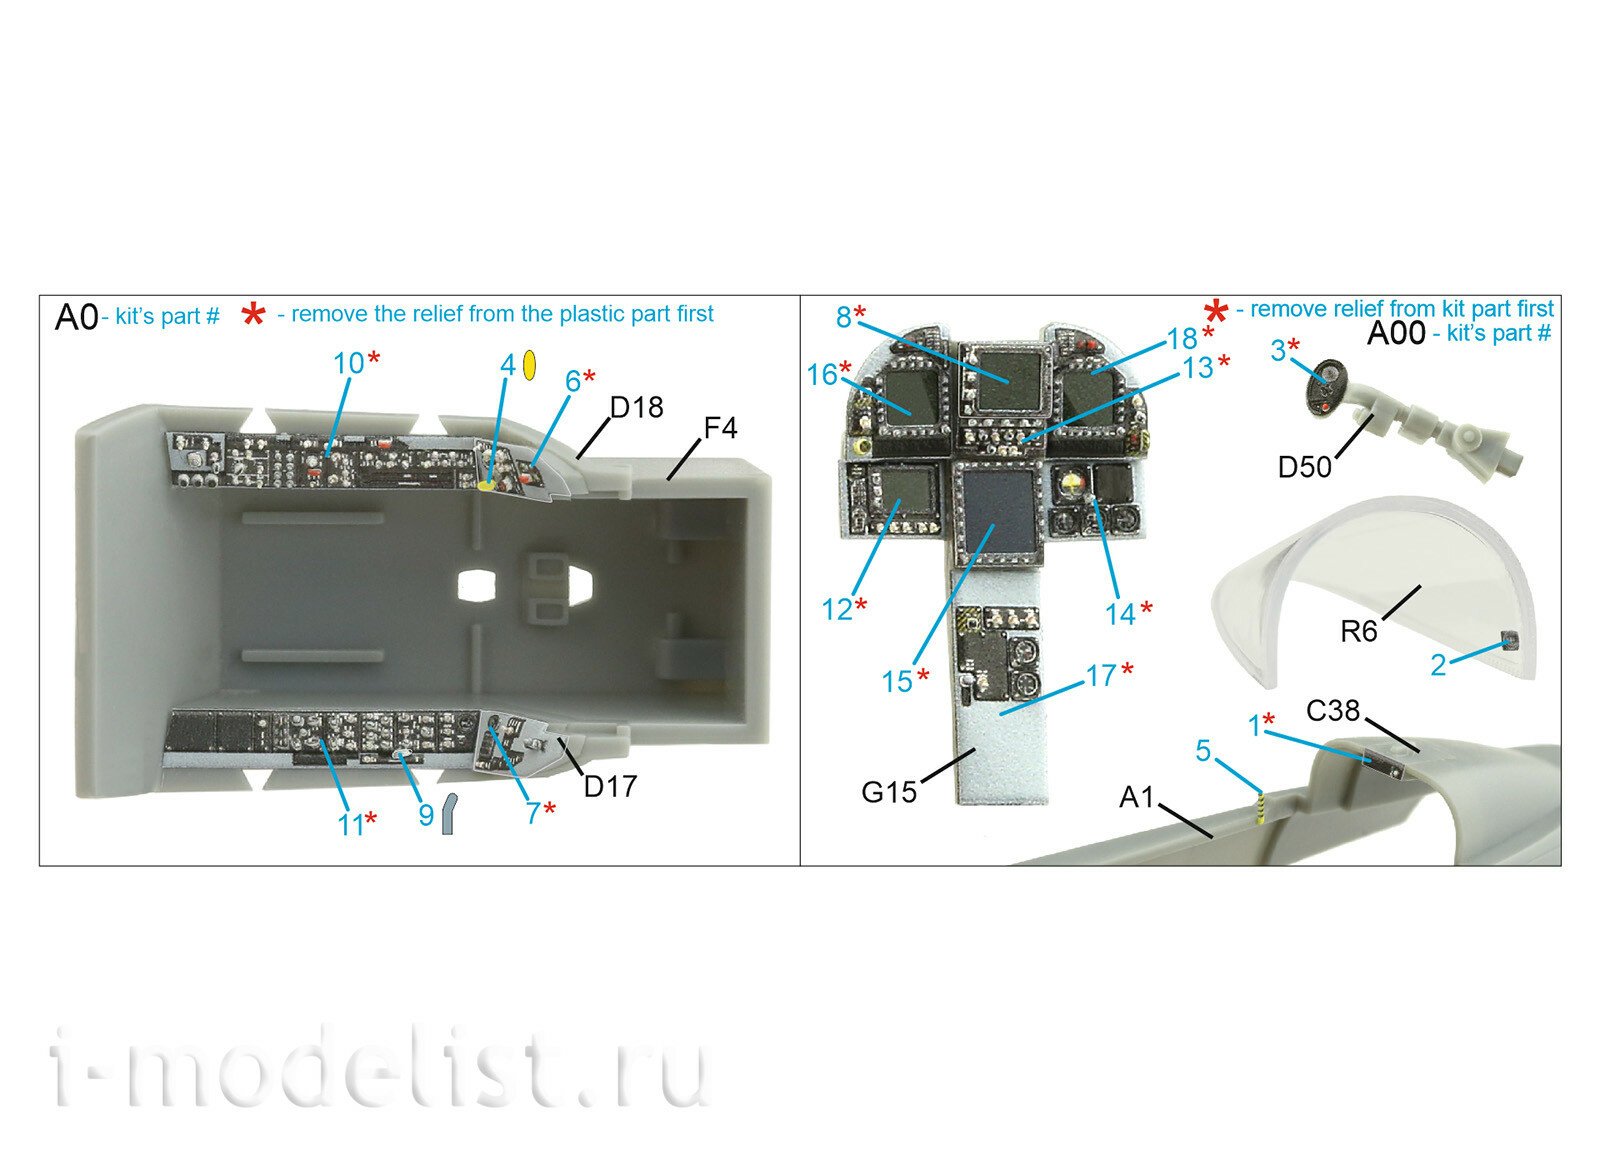 QDS-48259 Quinta Studio 1/48 3D Декаль интерьера кабины F/A-18E (HobbyBoss) (малая версия)